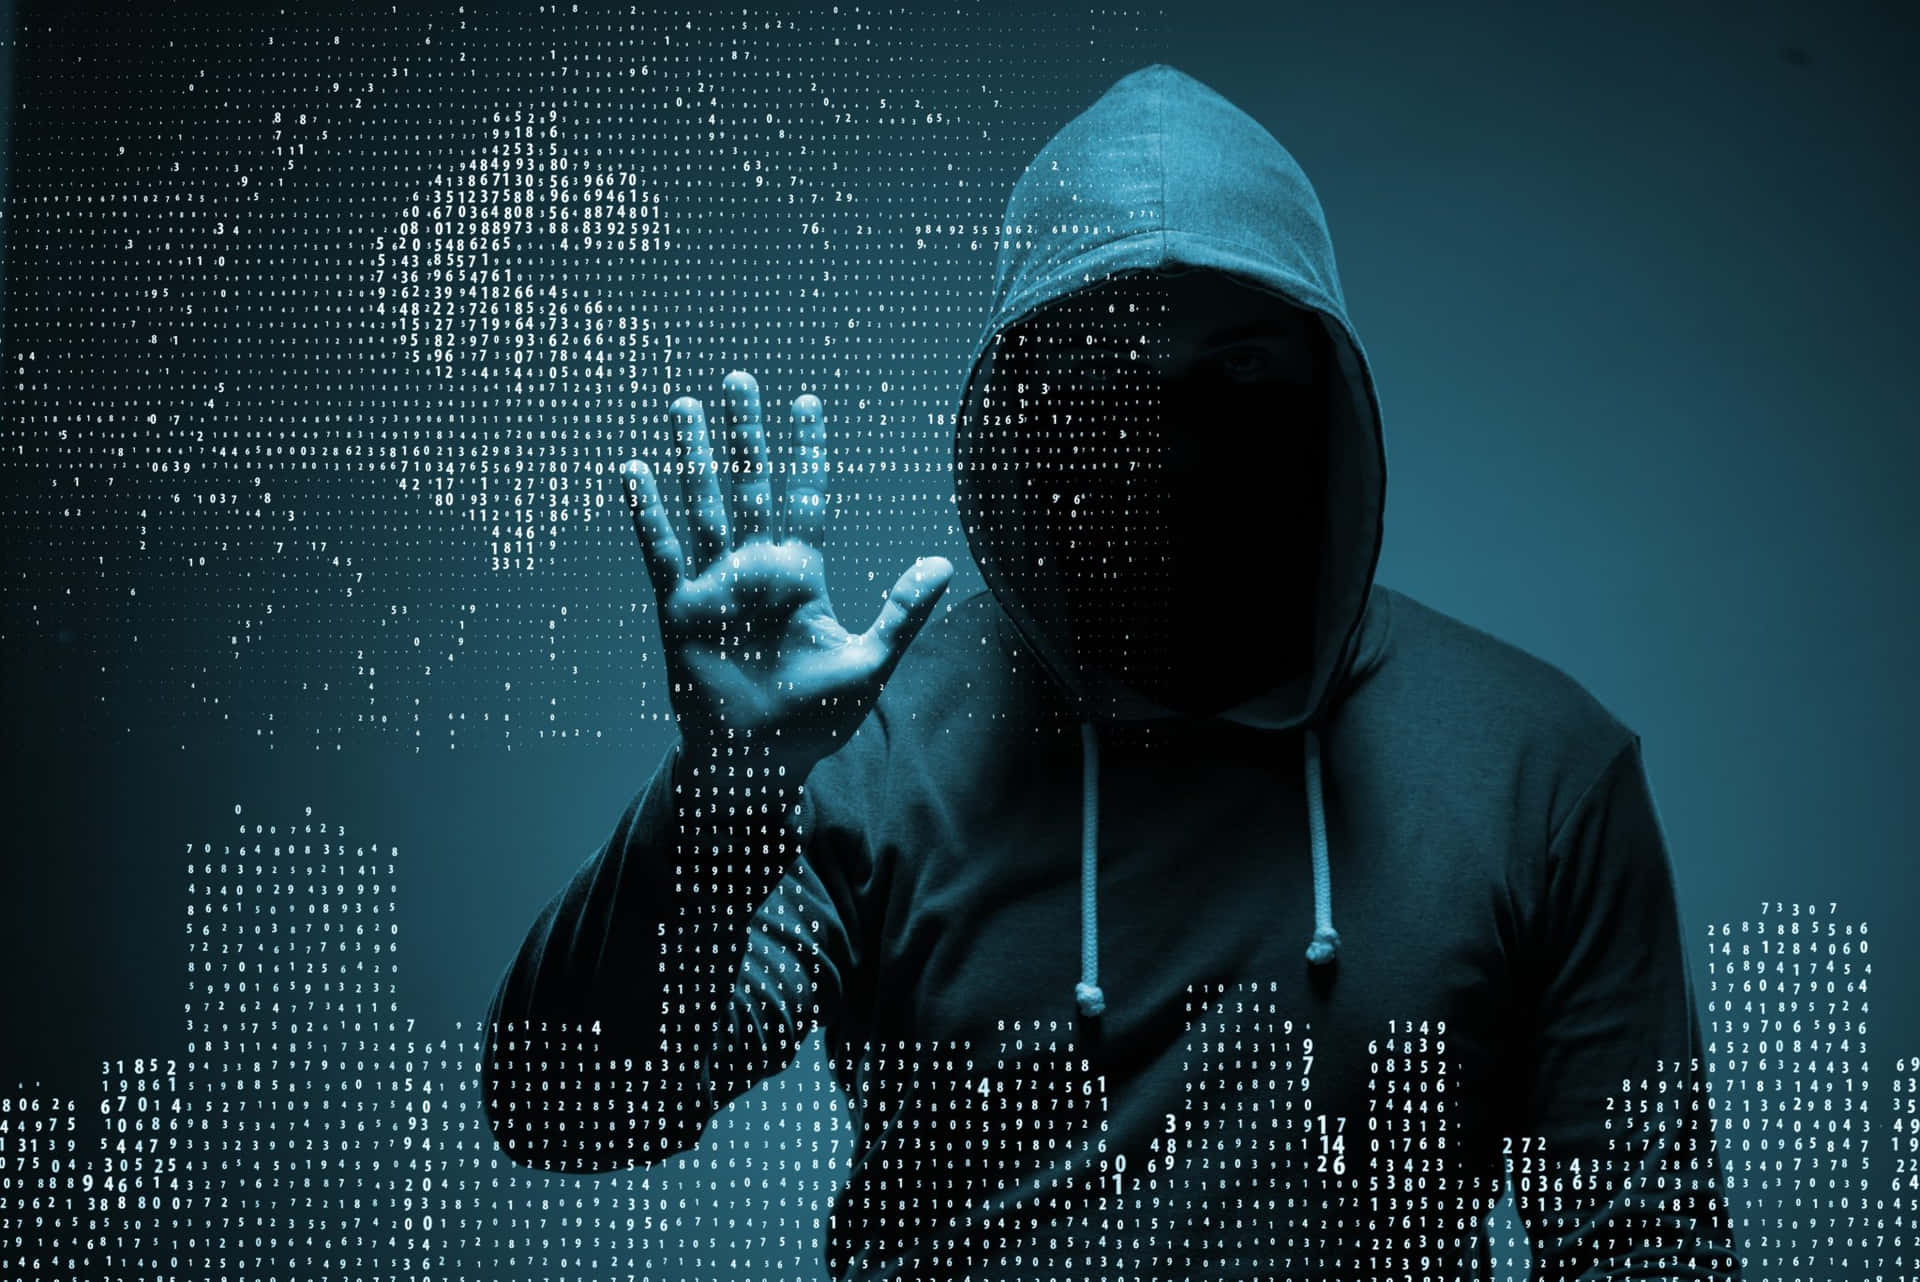 "Unmasking the Hacker: The Mastermind Behind the Digital World"